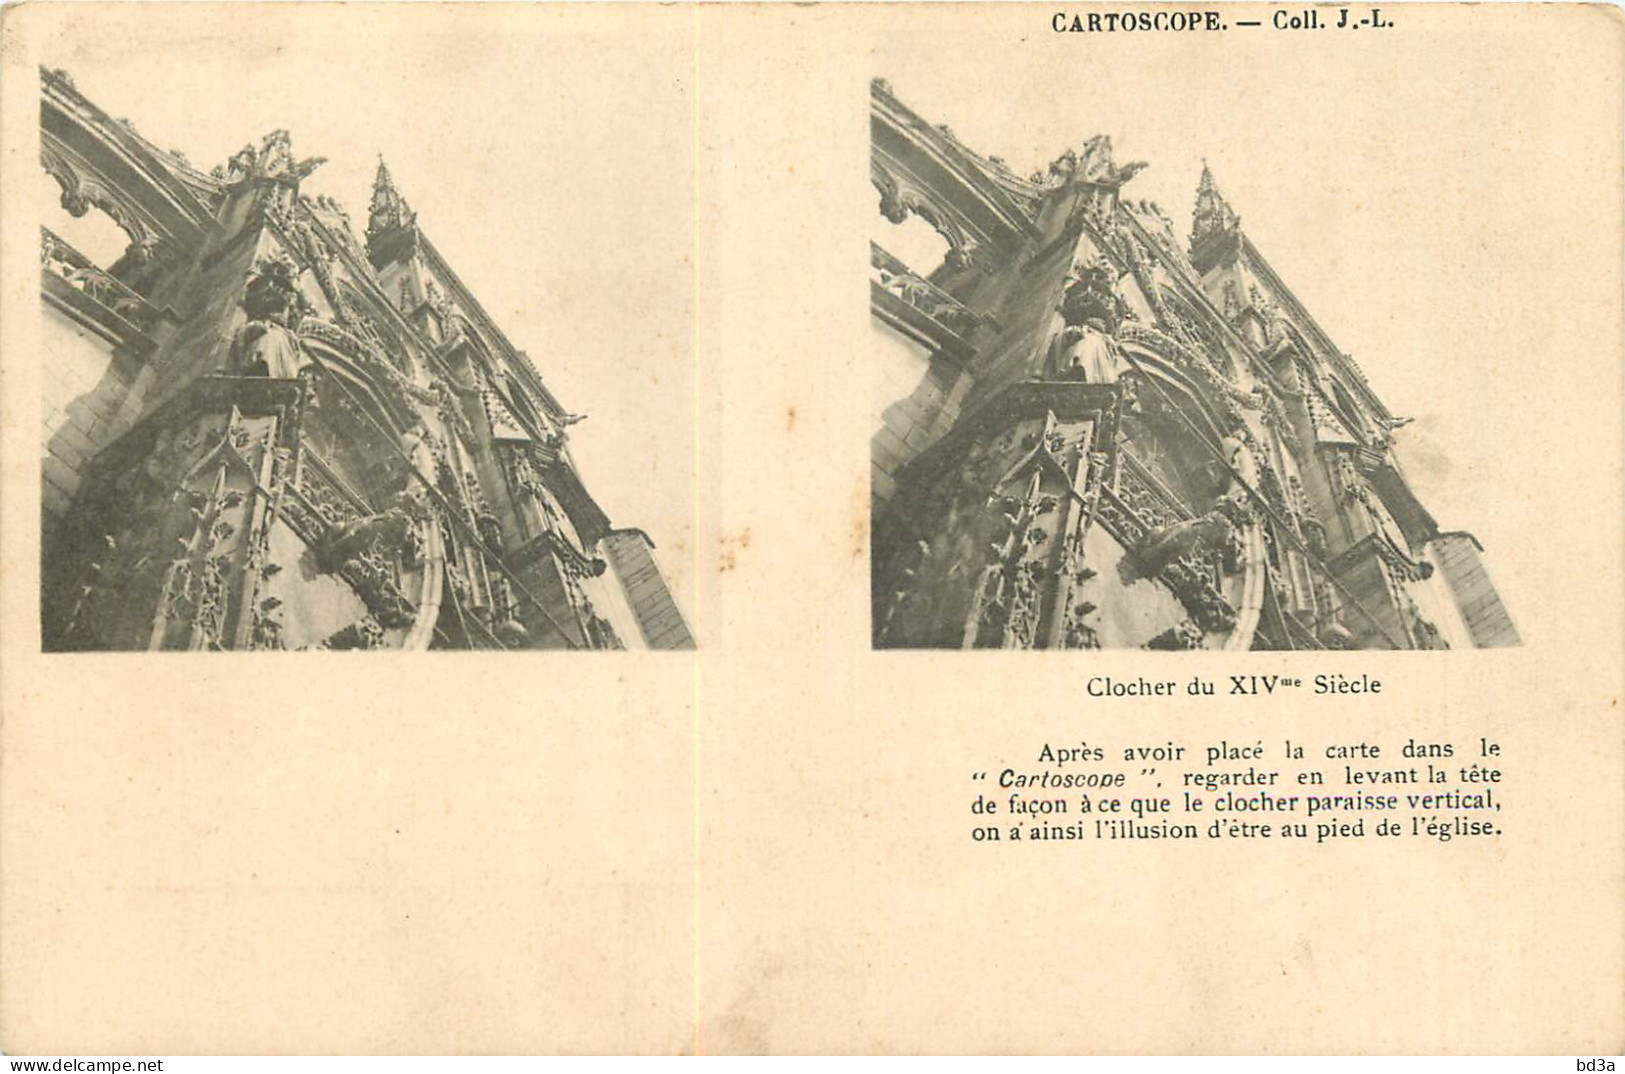 CARTE STEREOSCOPIQUE -  CLOCHER DU XIVème SIECLE  - CARTOSCOPE - COLL J.L. - Stereoscope Cards